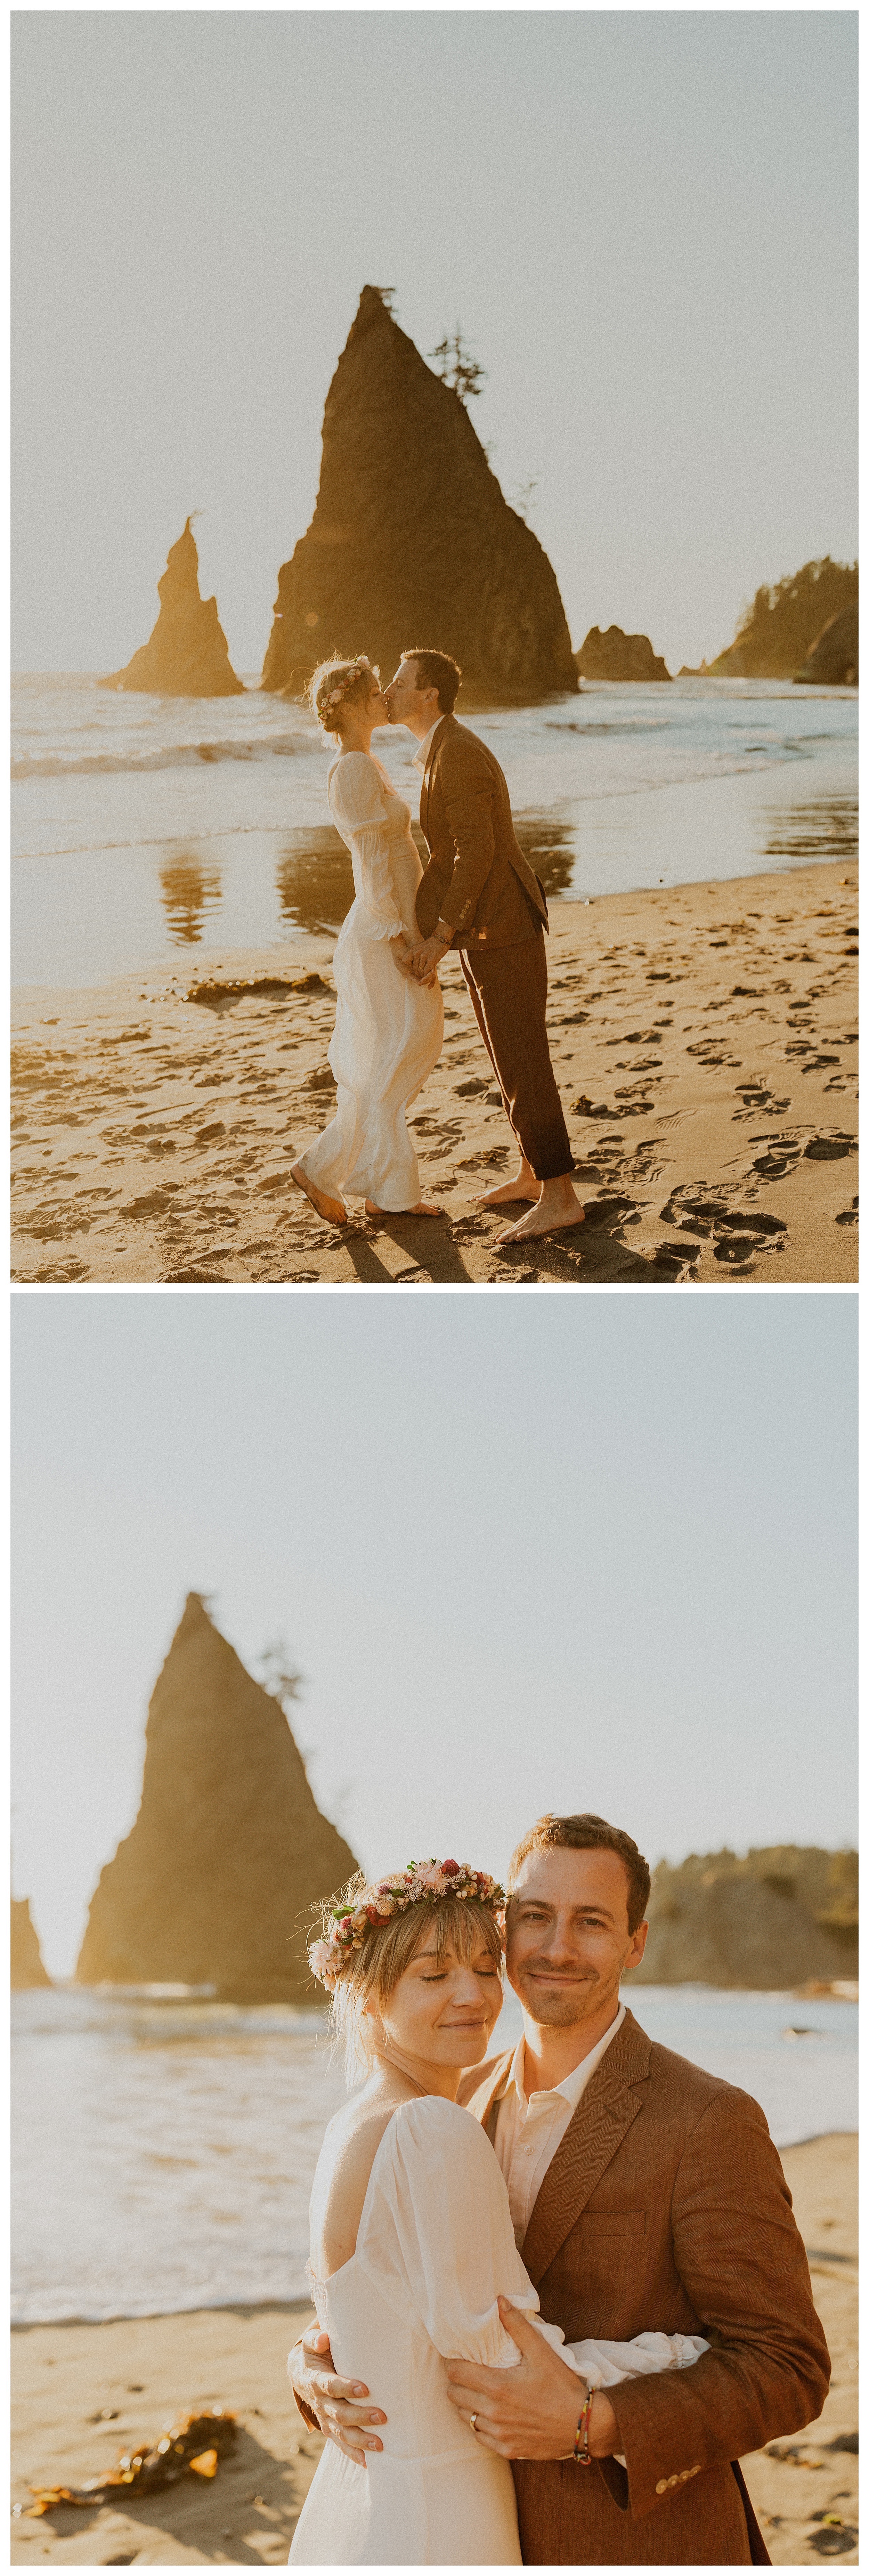 bride and groom kissing rialto beach

